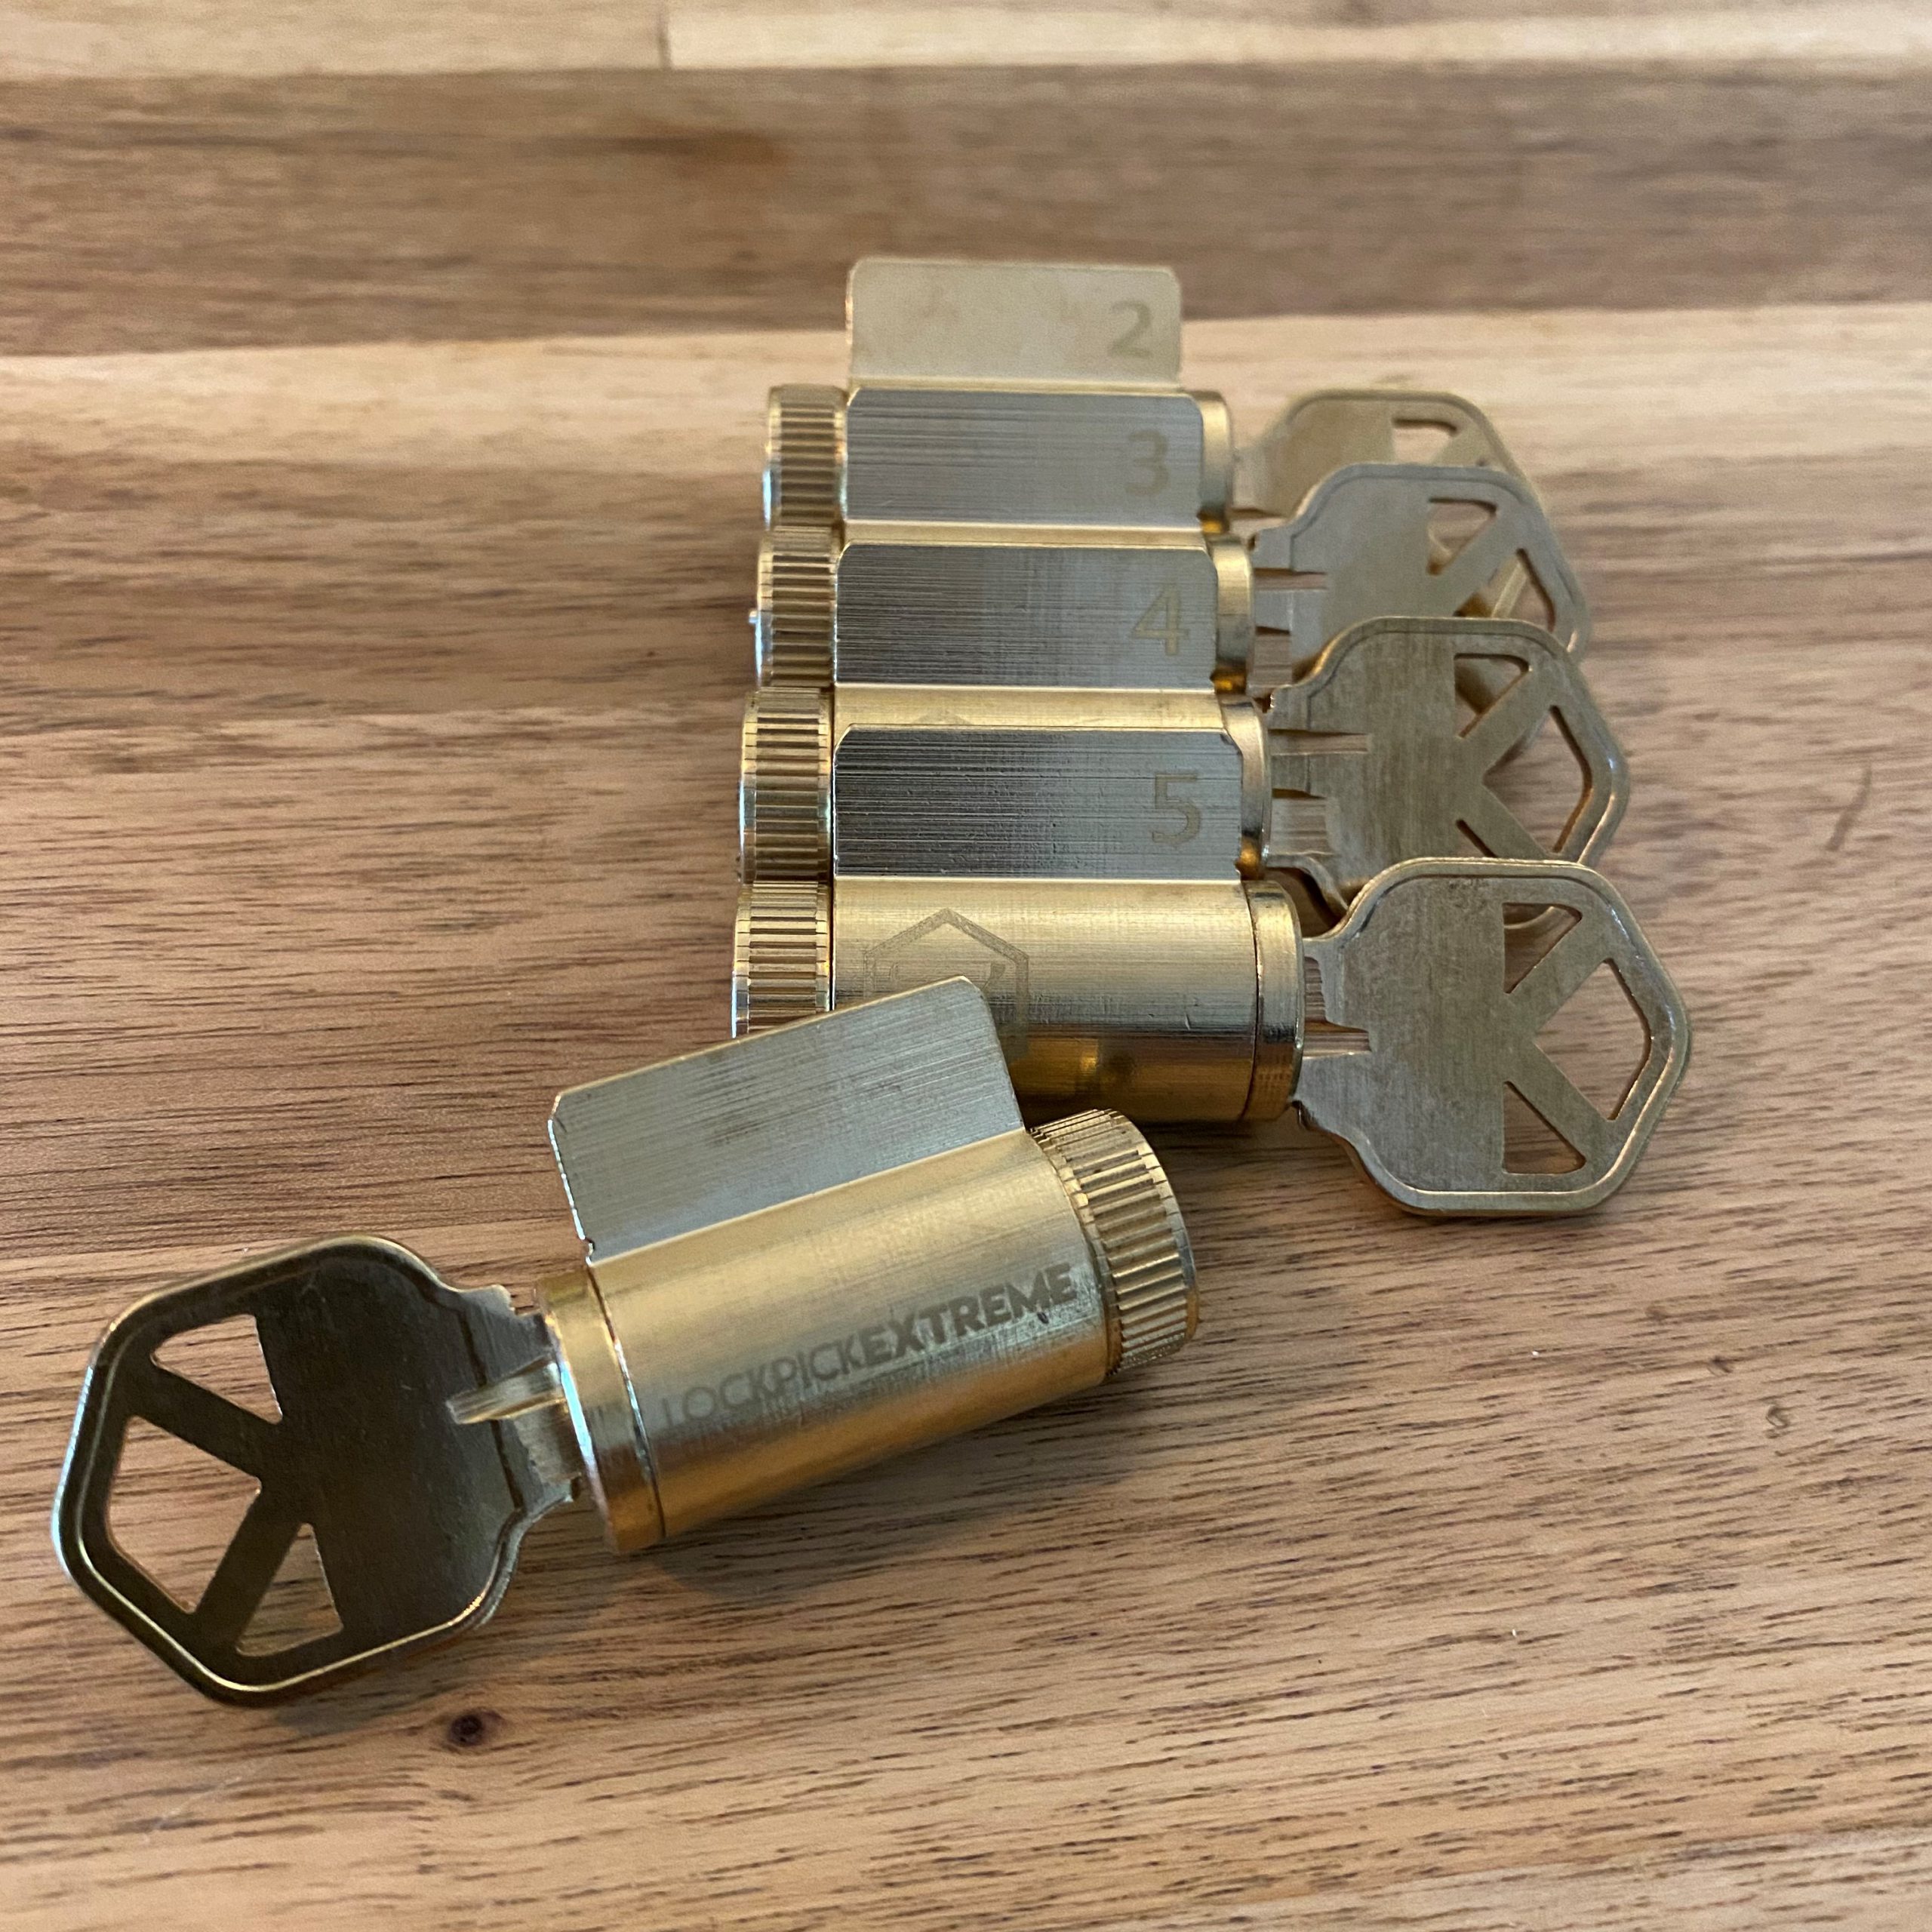 6 Pin All-In-One Lock Picking Training Kit 